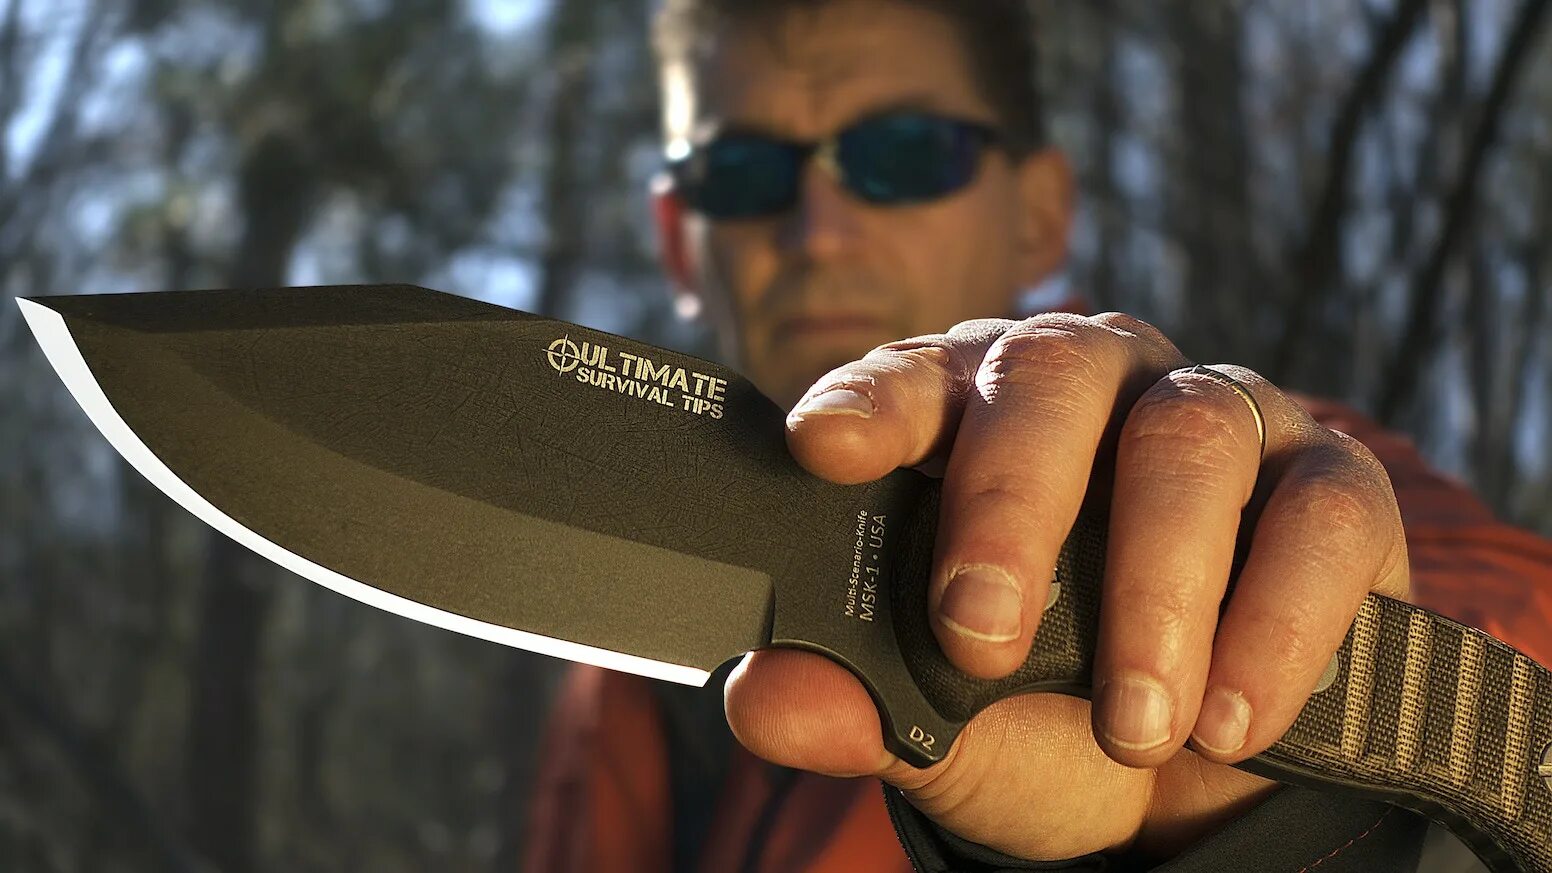 Ножевой видео. Msk-1 Survival Knife. Cut 1 нож. Нож Outdoor Mate. Survival Knife нож охотничий.